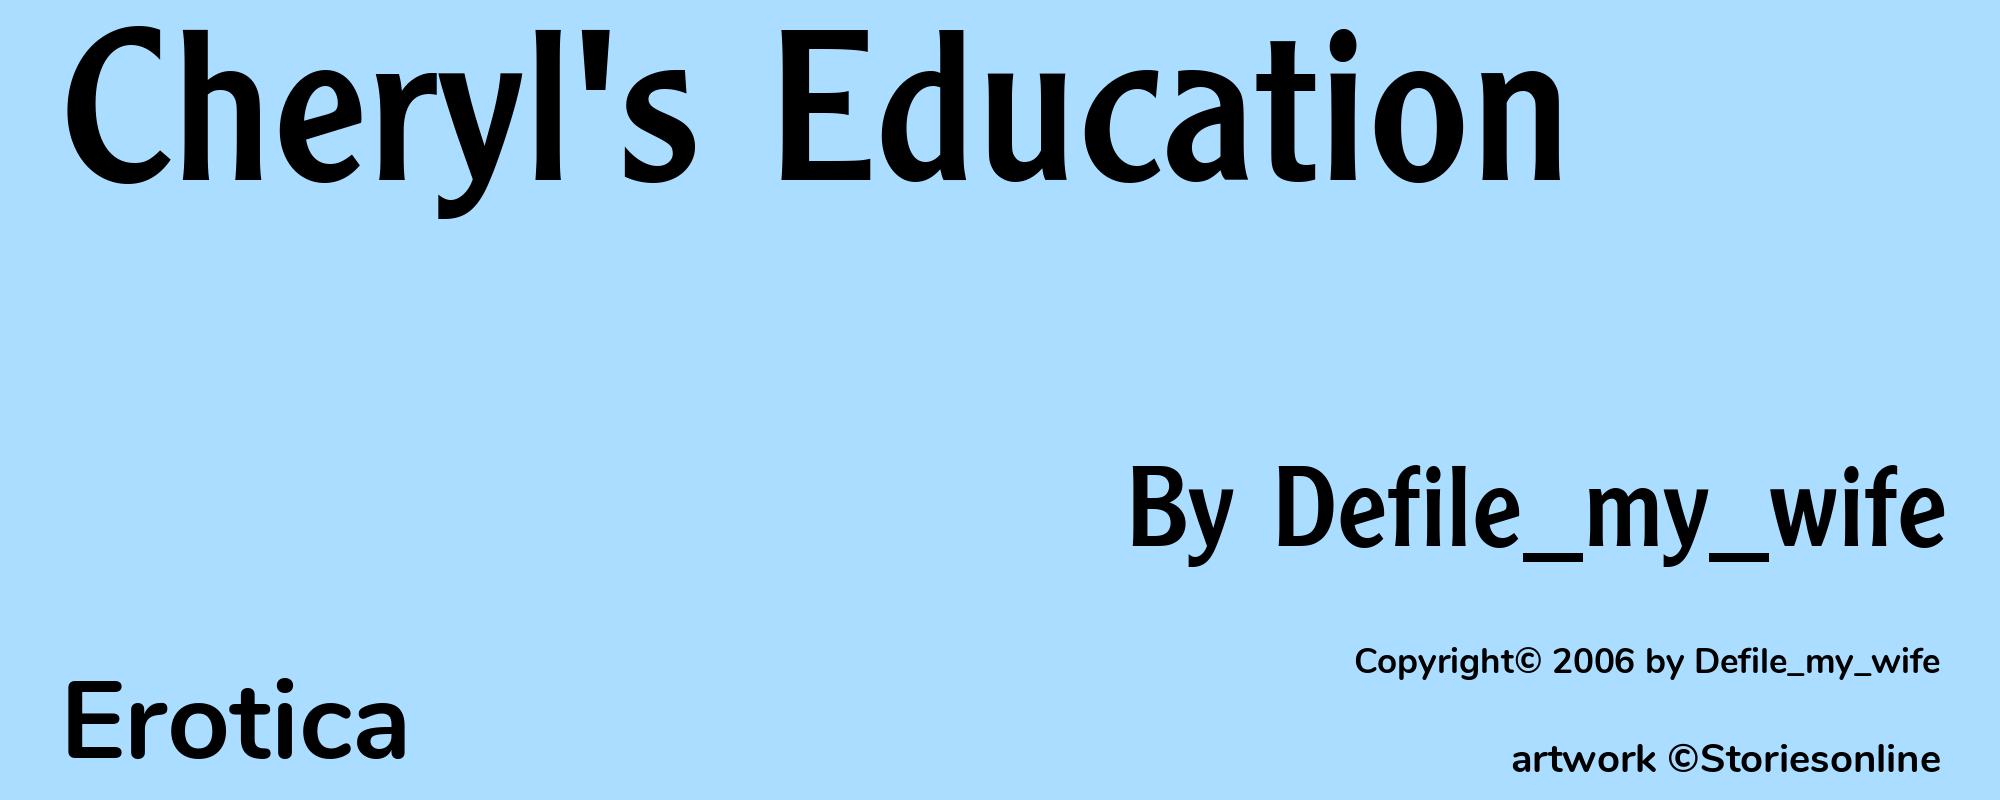 Cheryl's Education - Cover